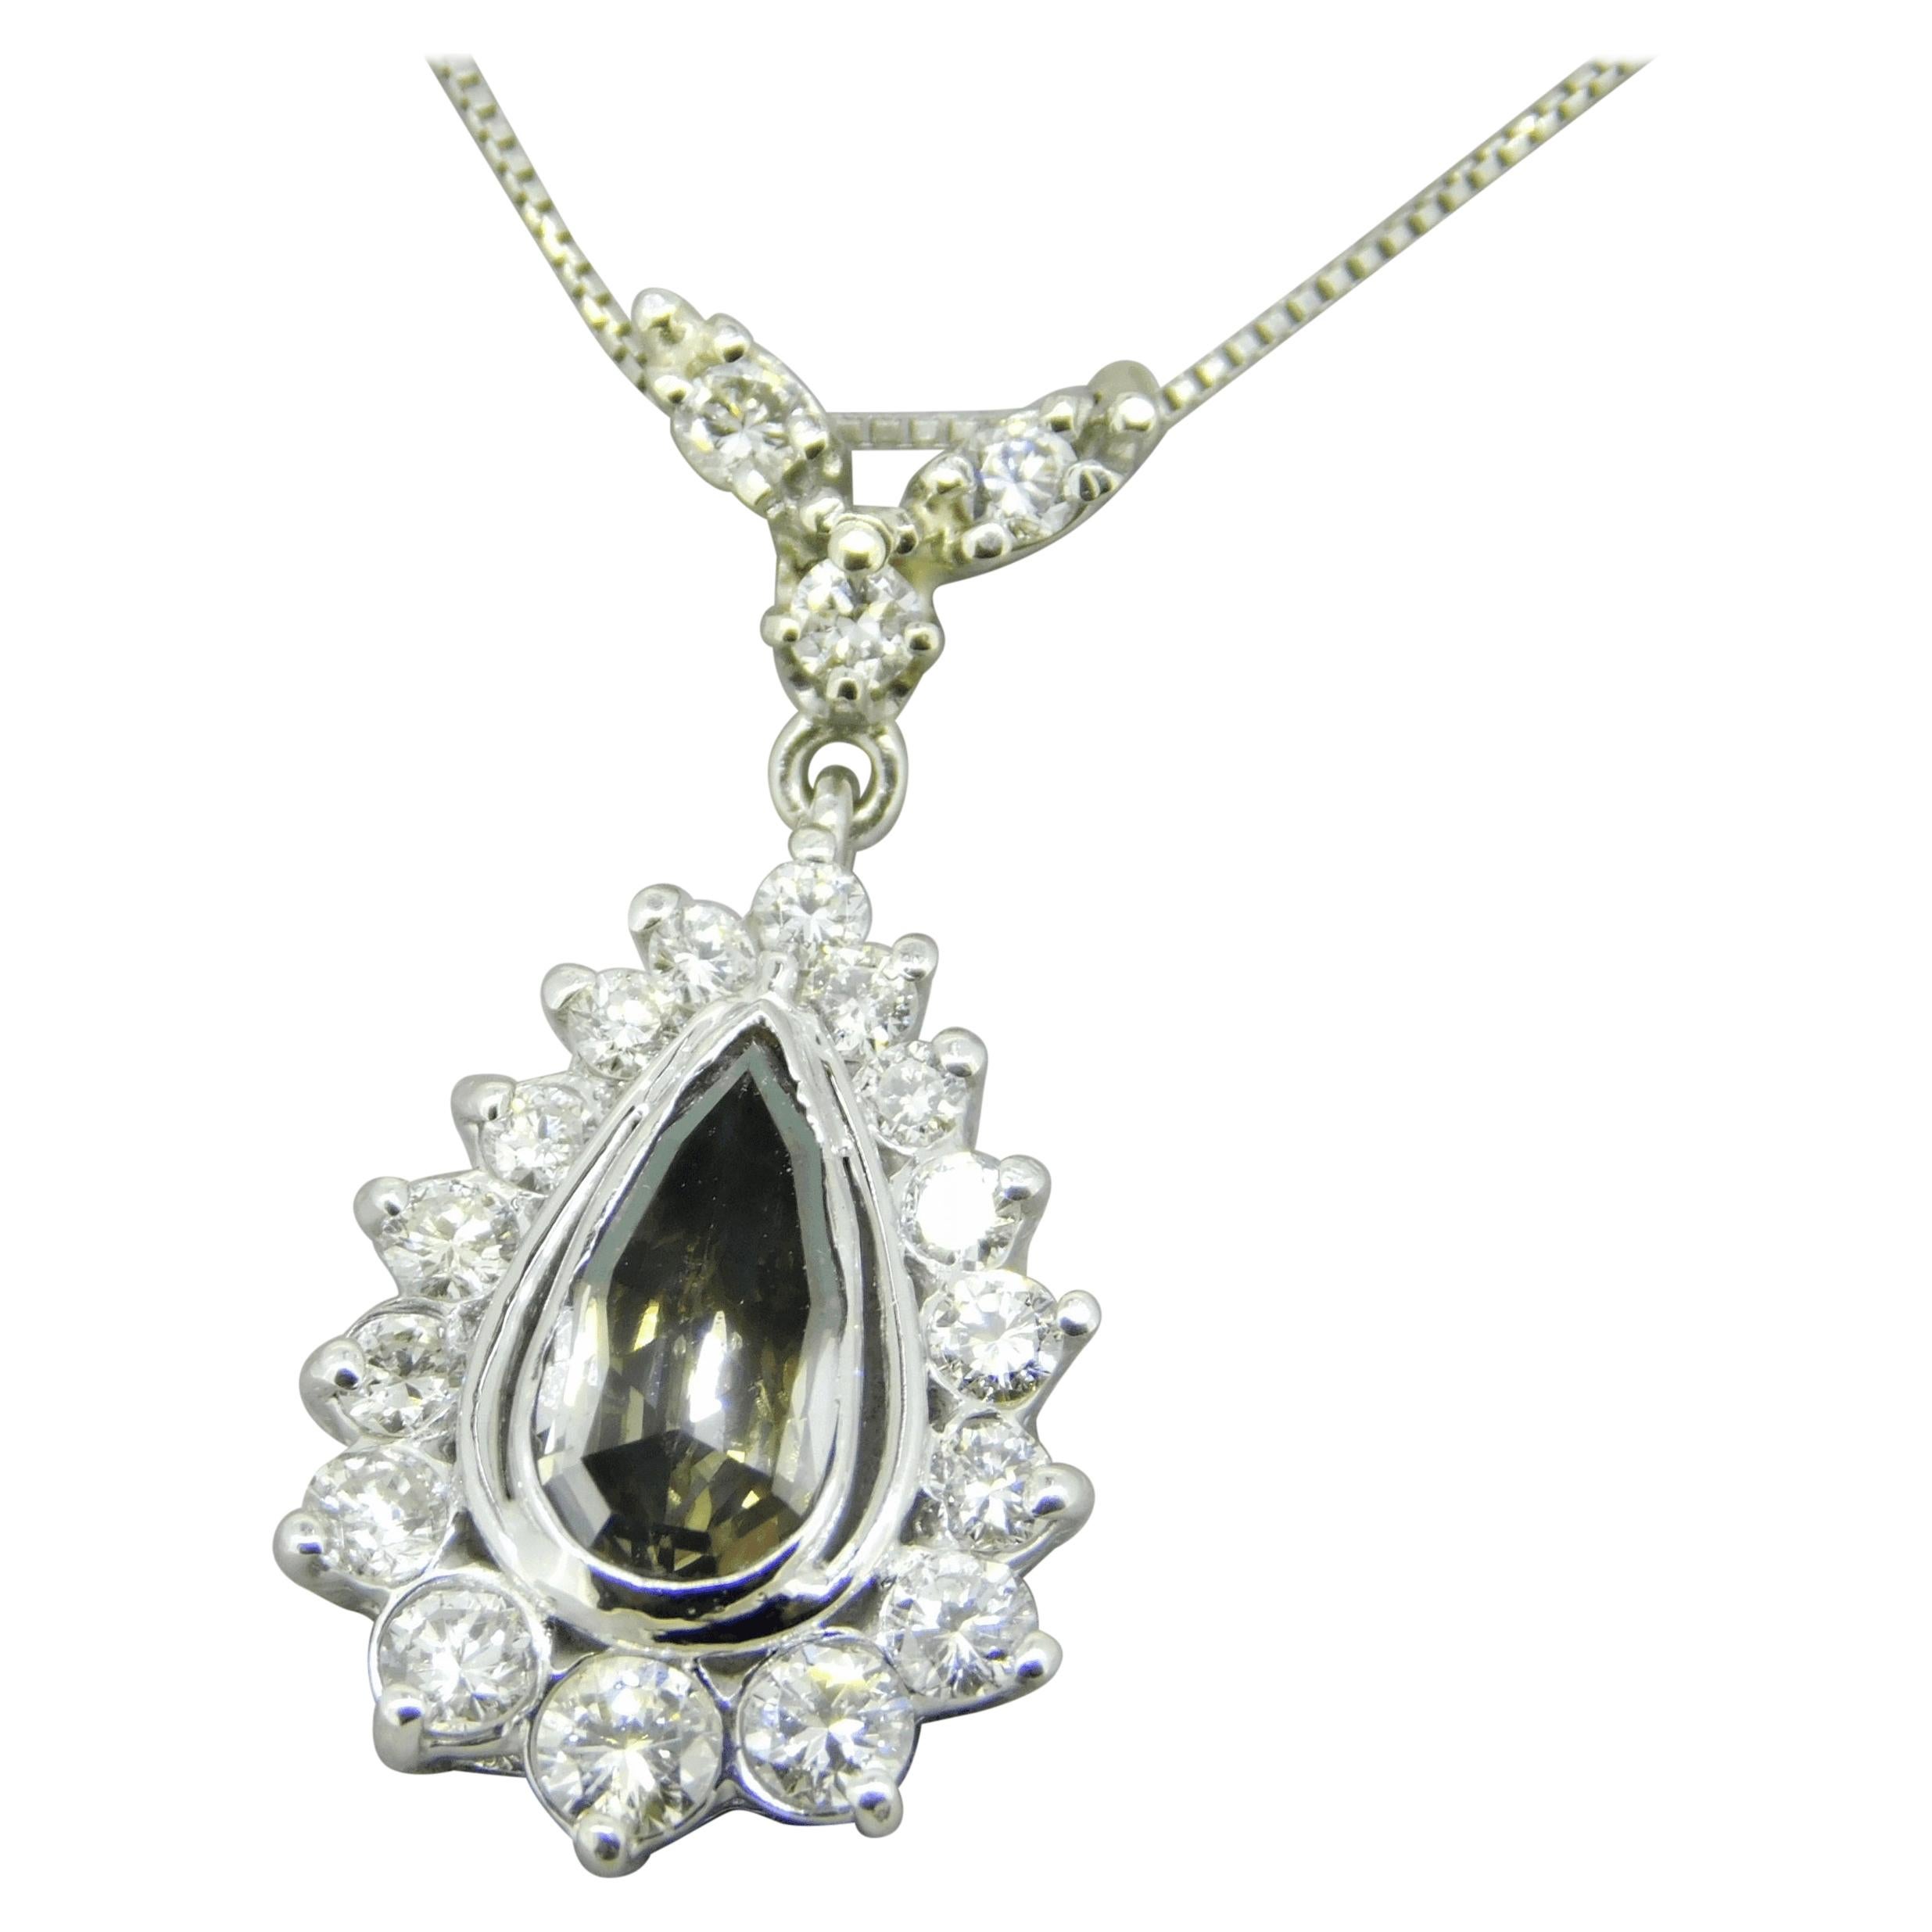 Platinum Pendant 1 Carat Fancy Gray Genuine Natural Diamond GIA Report '#J4654' For Sale